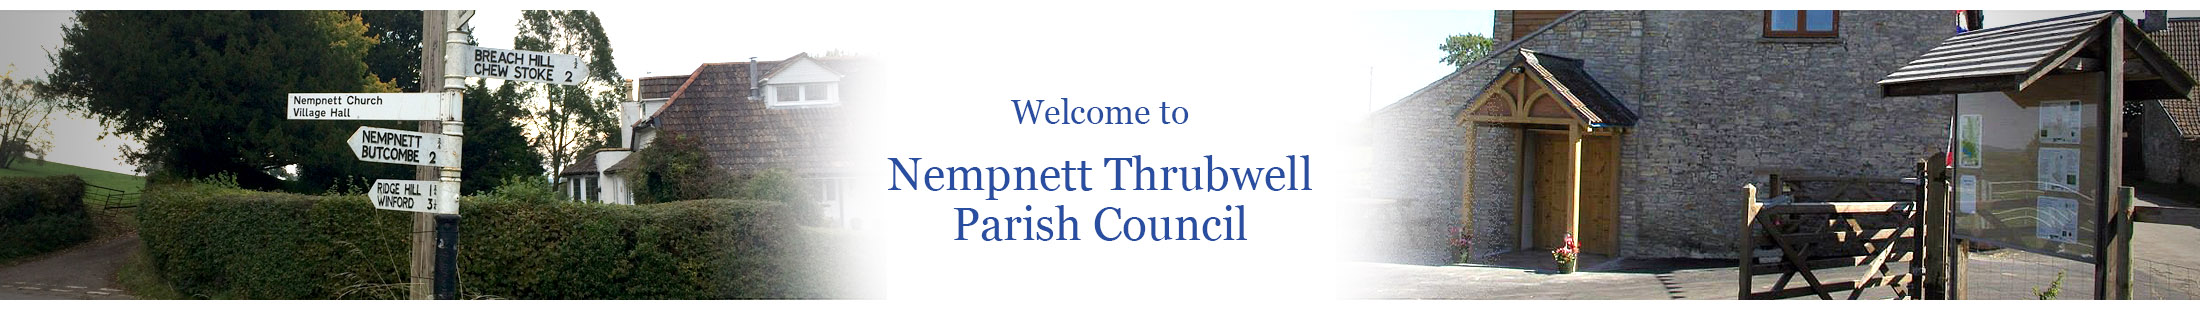 Header Image for Nempnett Thrubwell Parish Council